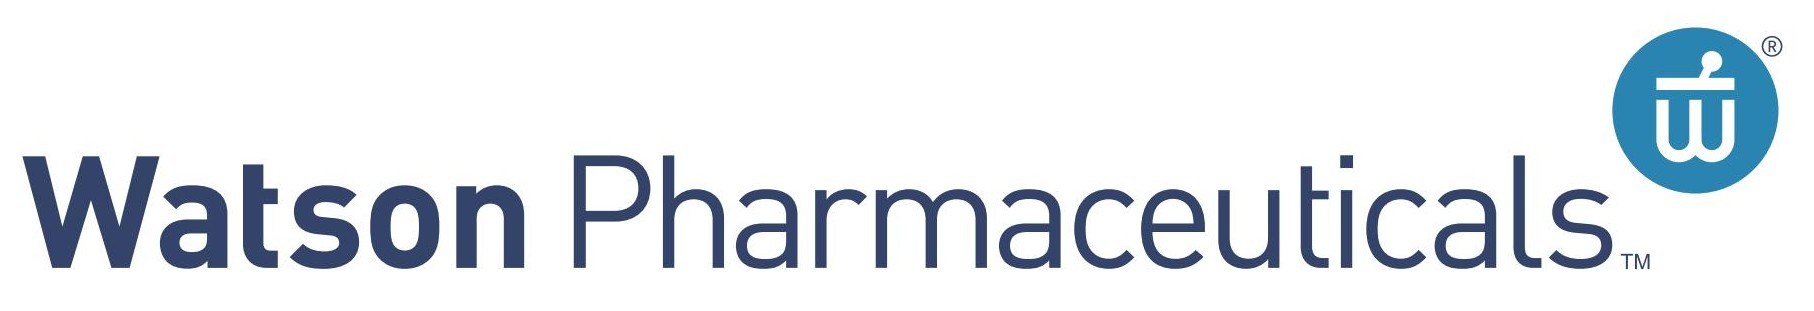 watson pharmaceuticals logo